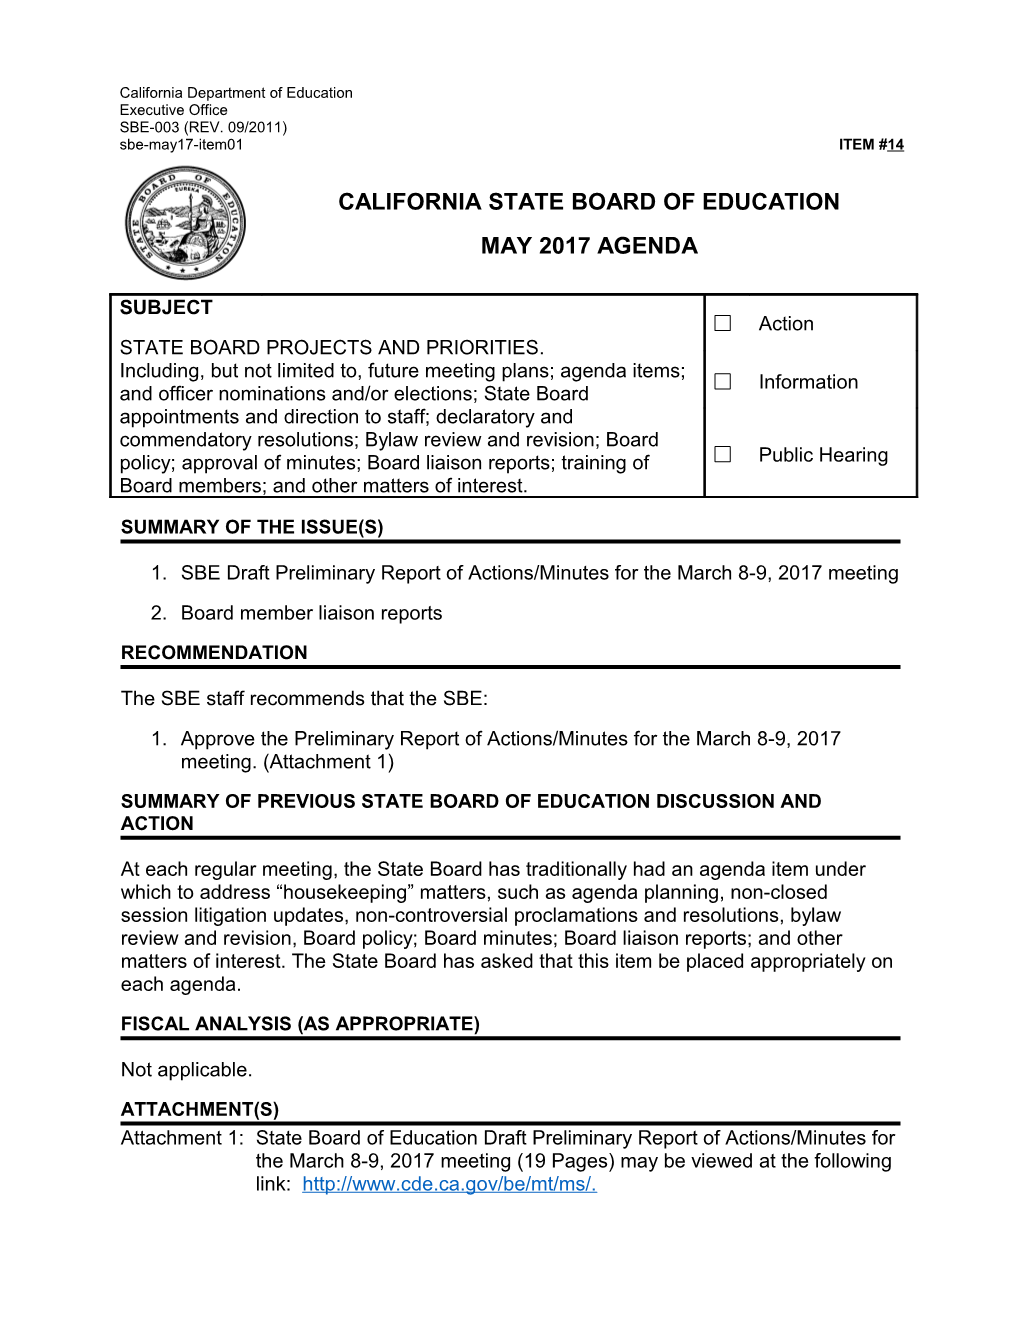 May 2017 Agenda Item 14 - Meeting Agendas (CA State Board of Education)